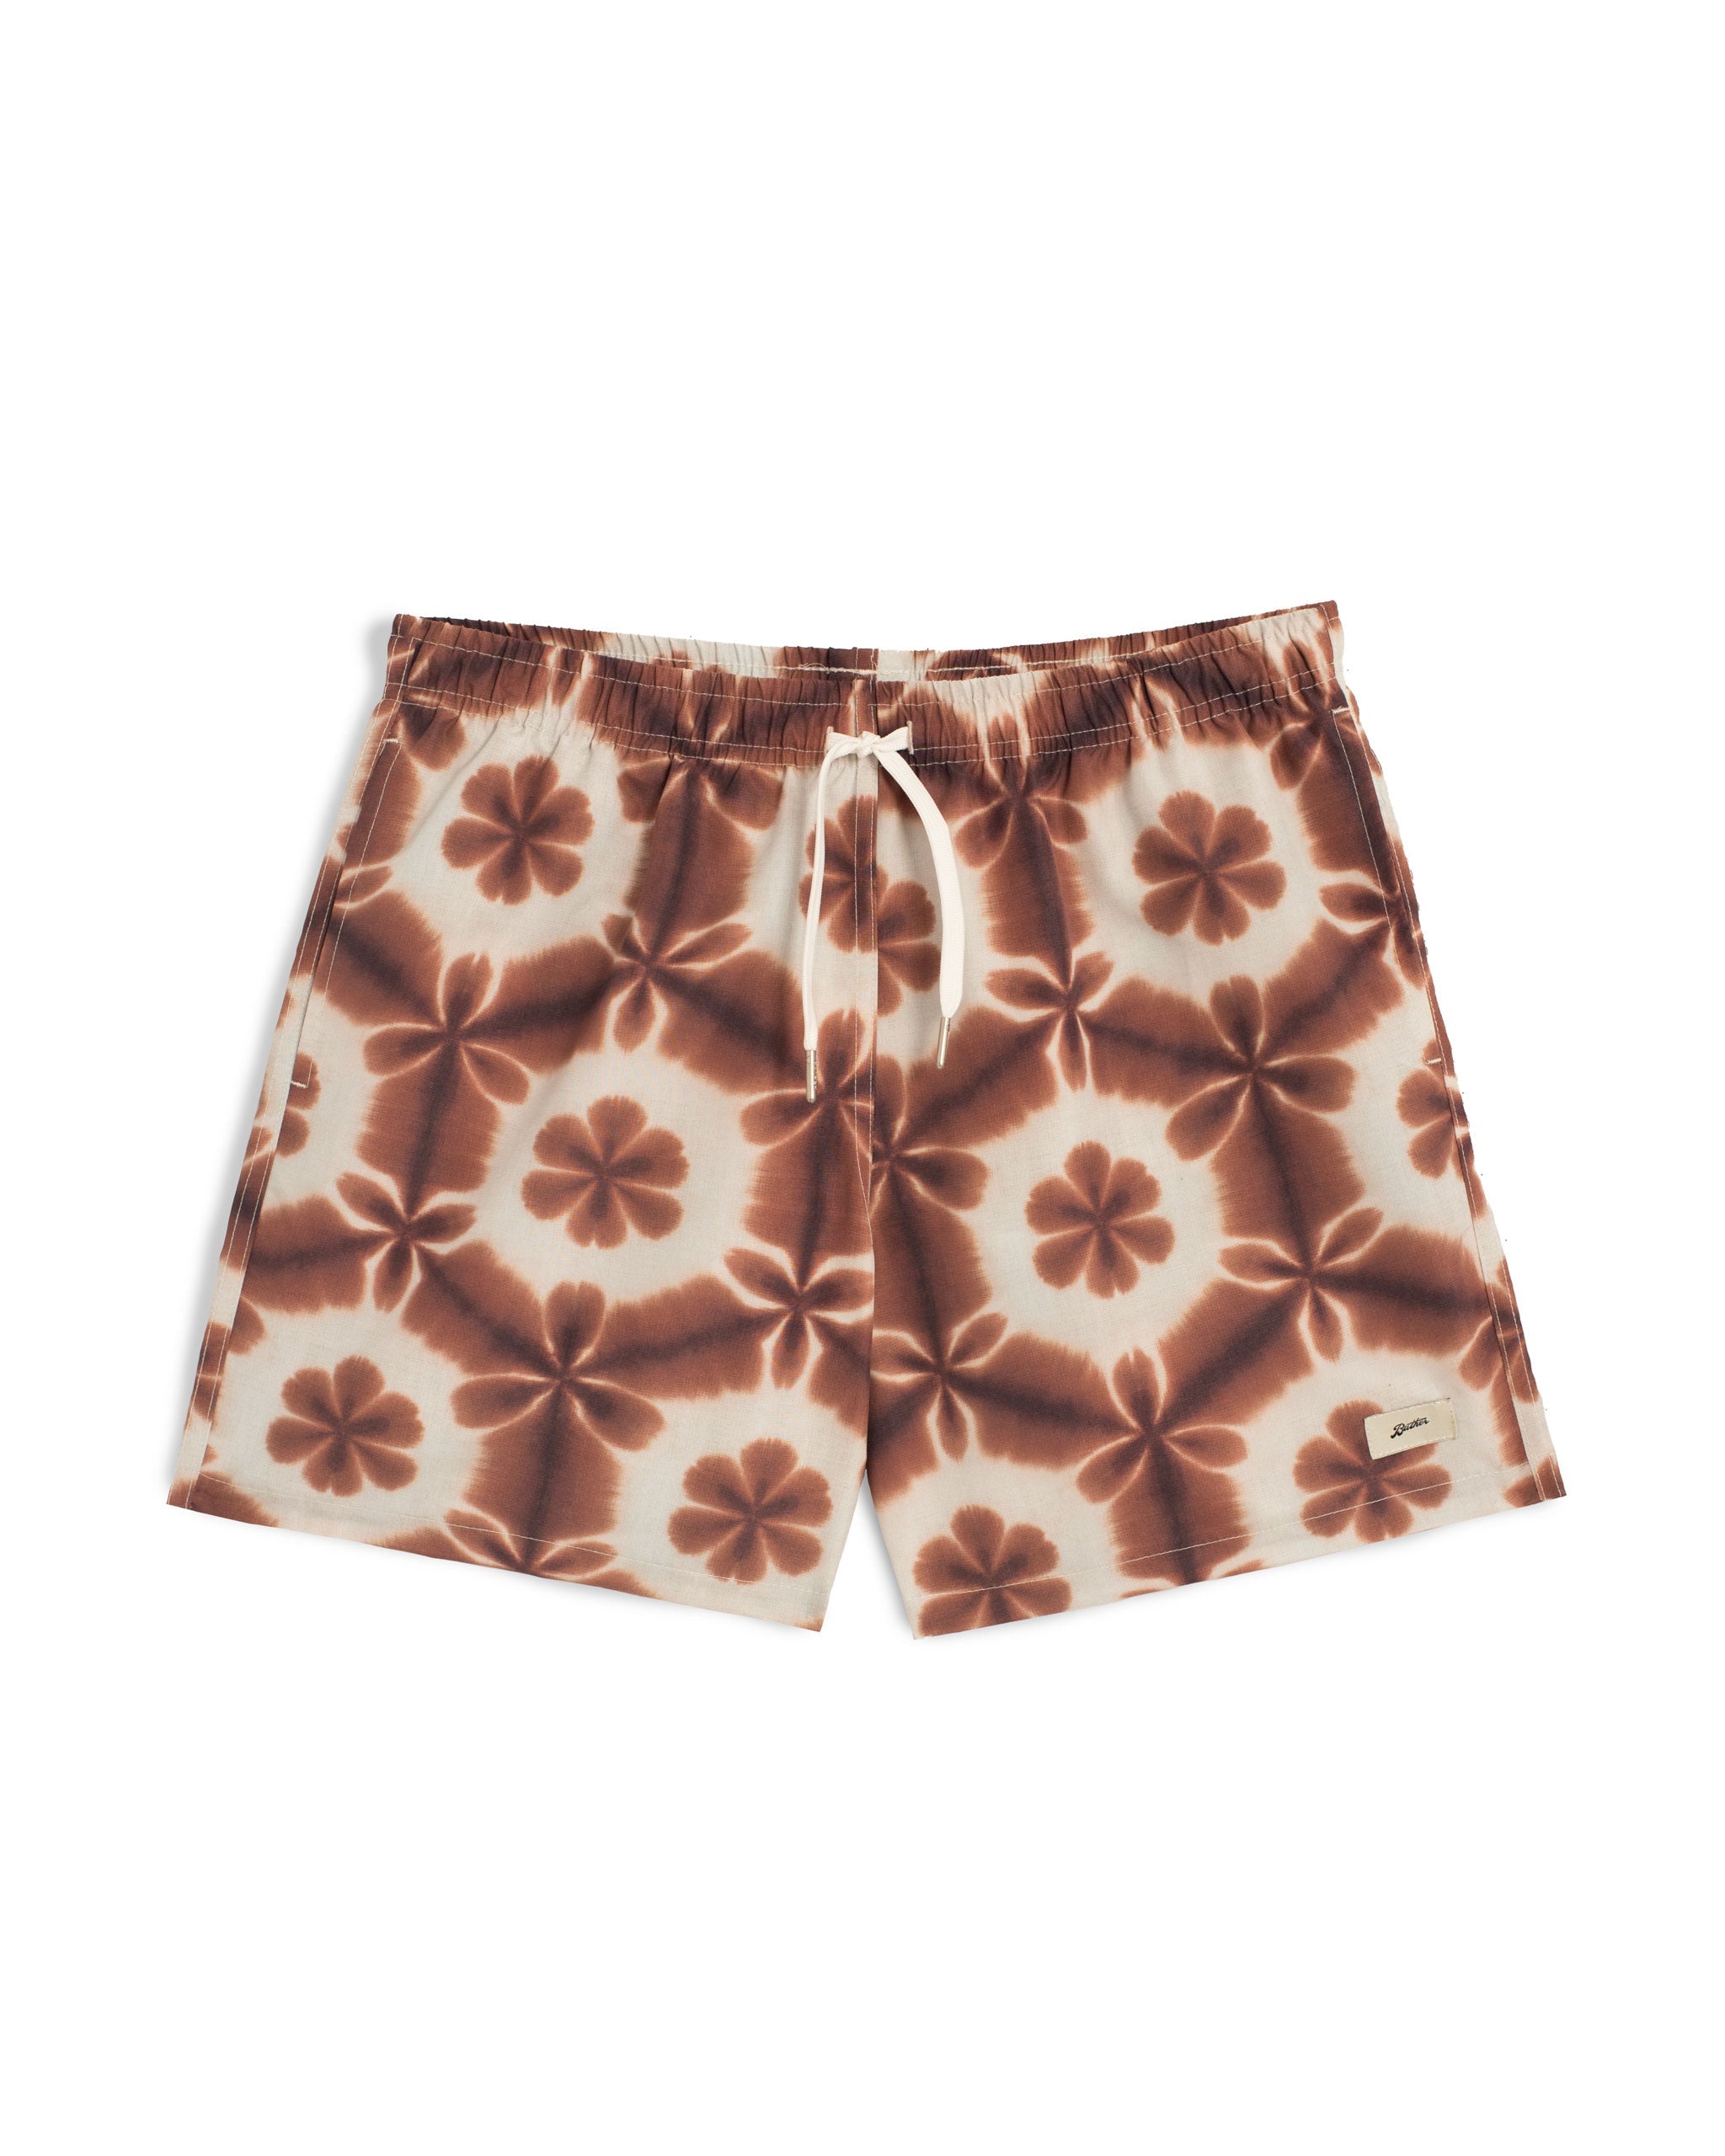 Brown swim trunk with a shibori-inspired print that looks like a kaleidoscope pattern